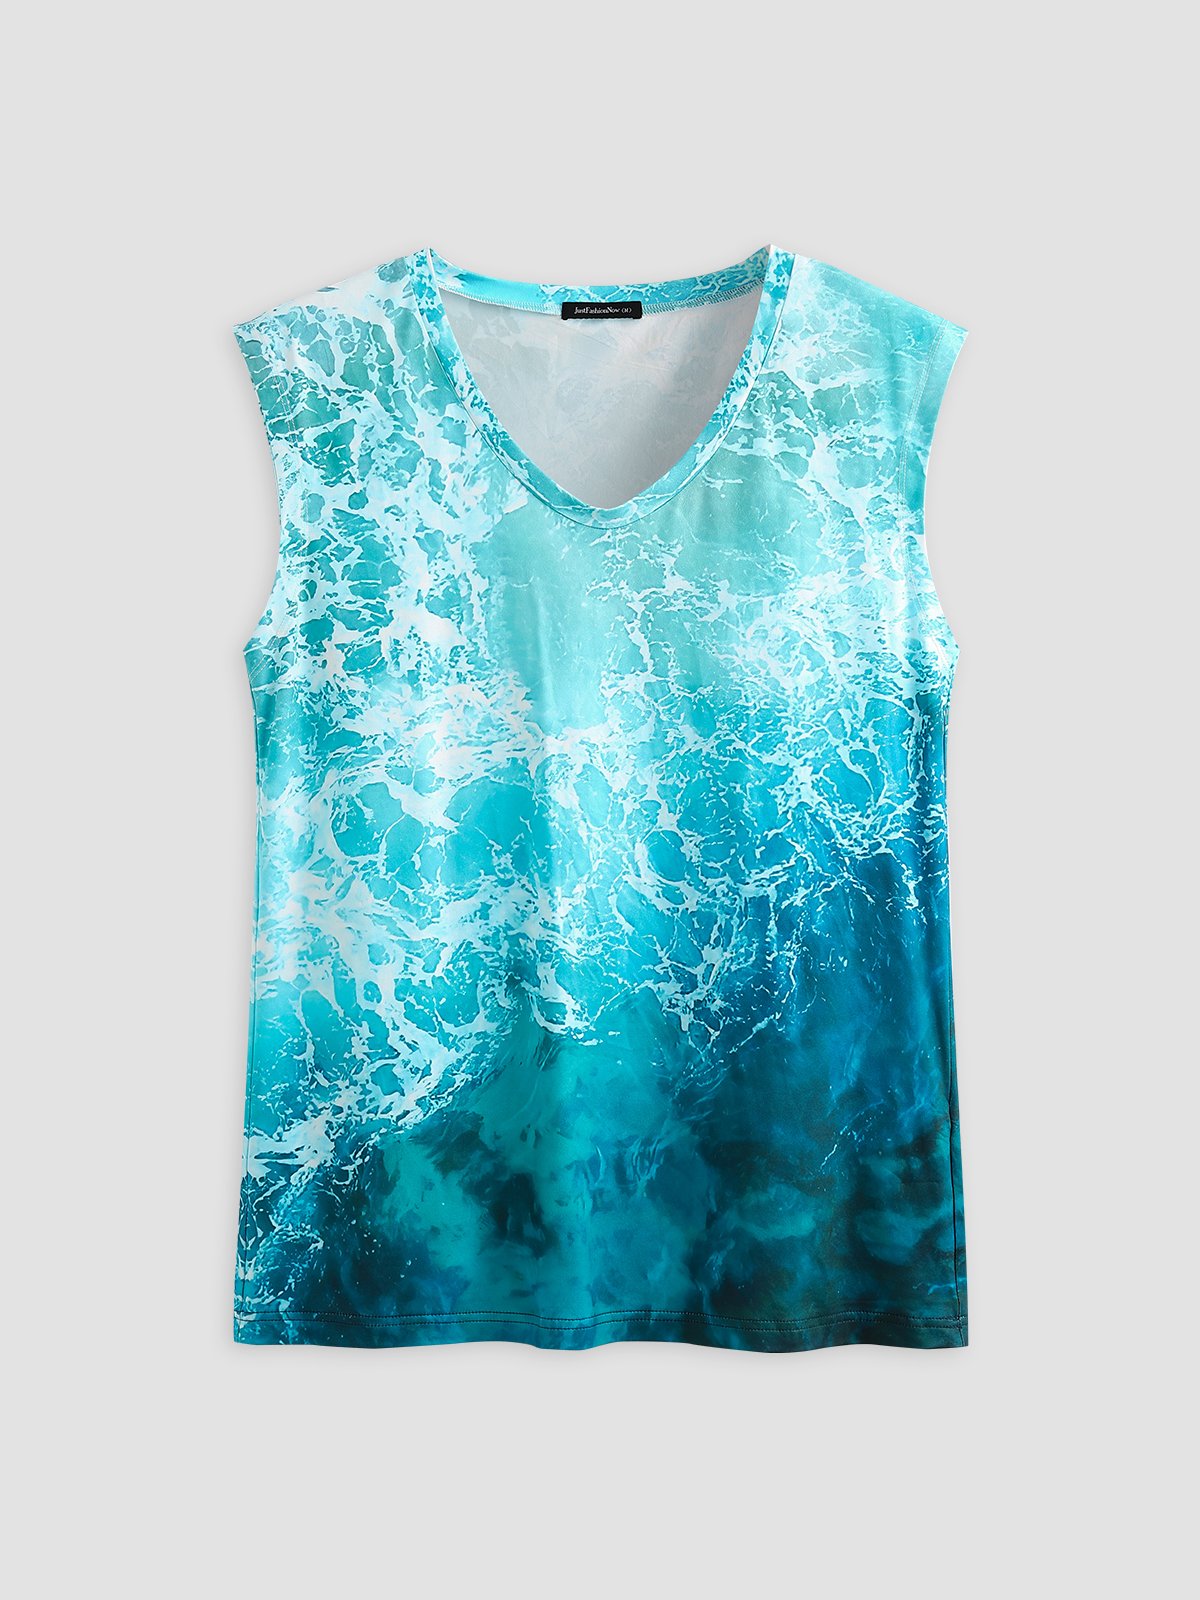 Maravilloso Oceano Gradiente Flojo Top Camiseta Talla Grande